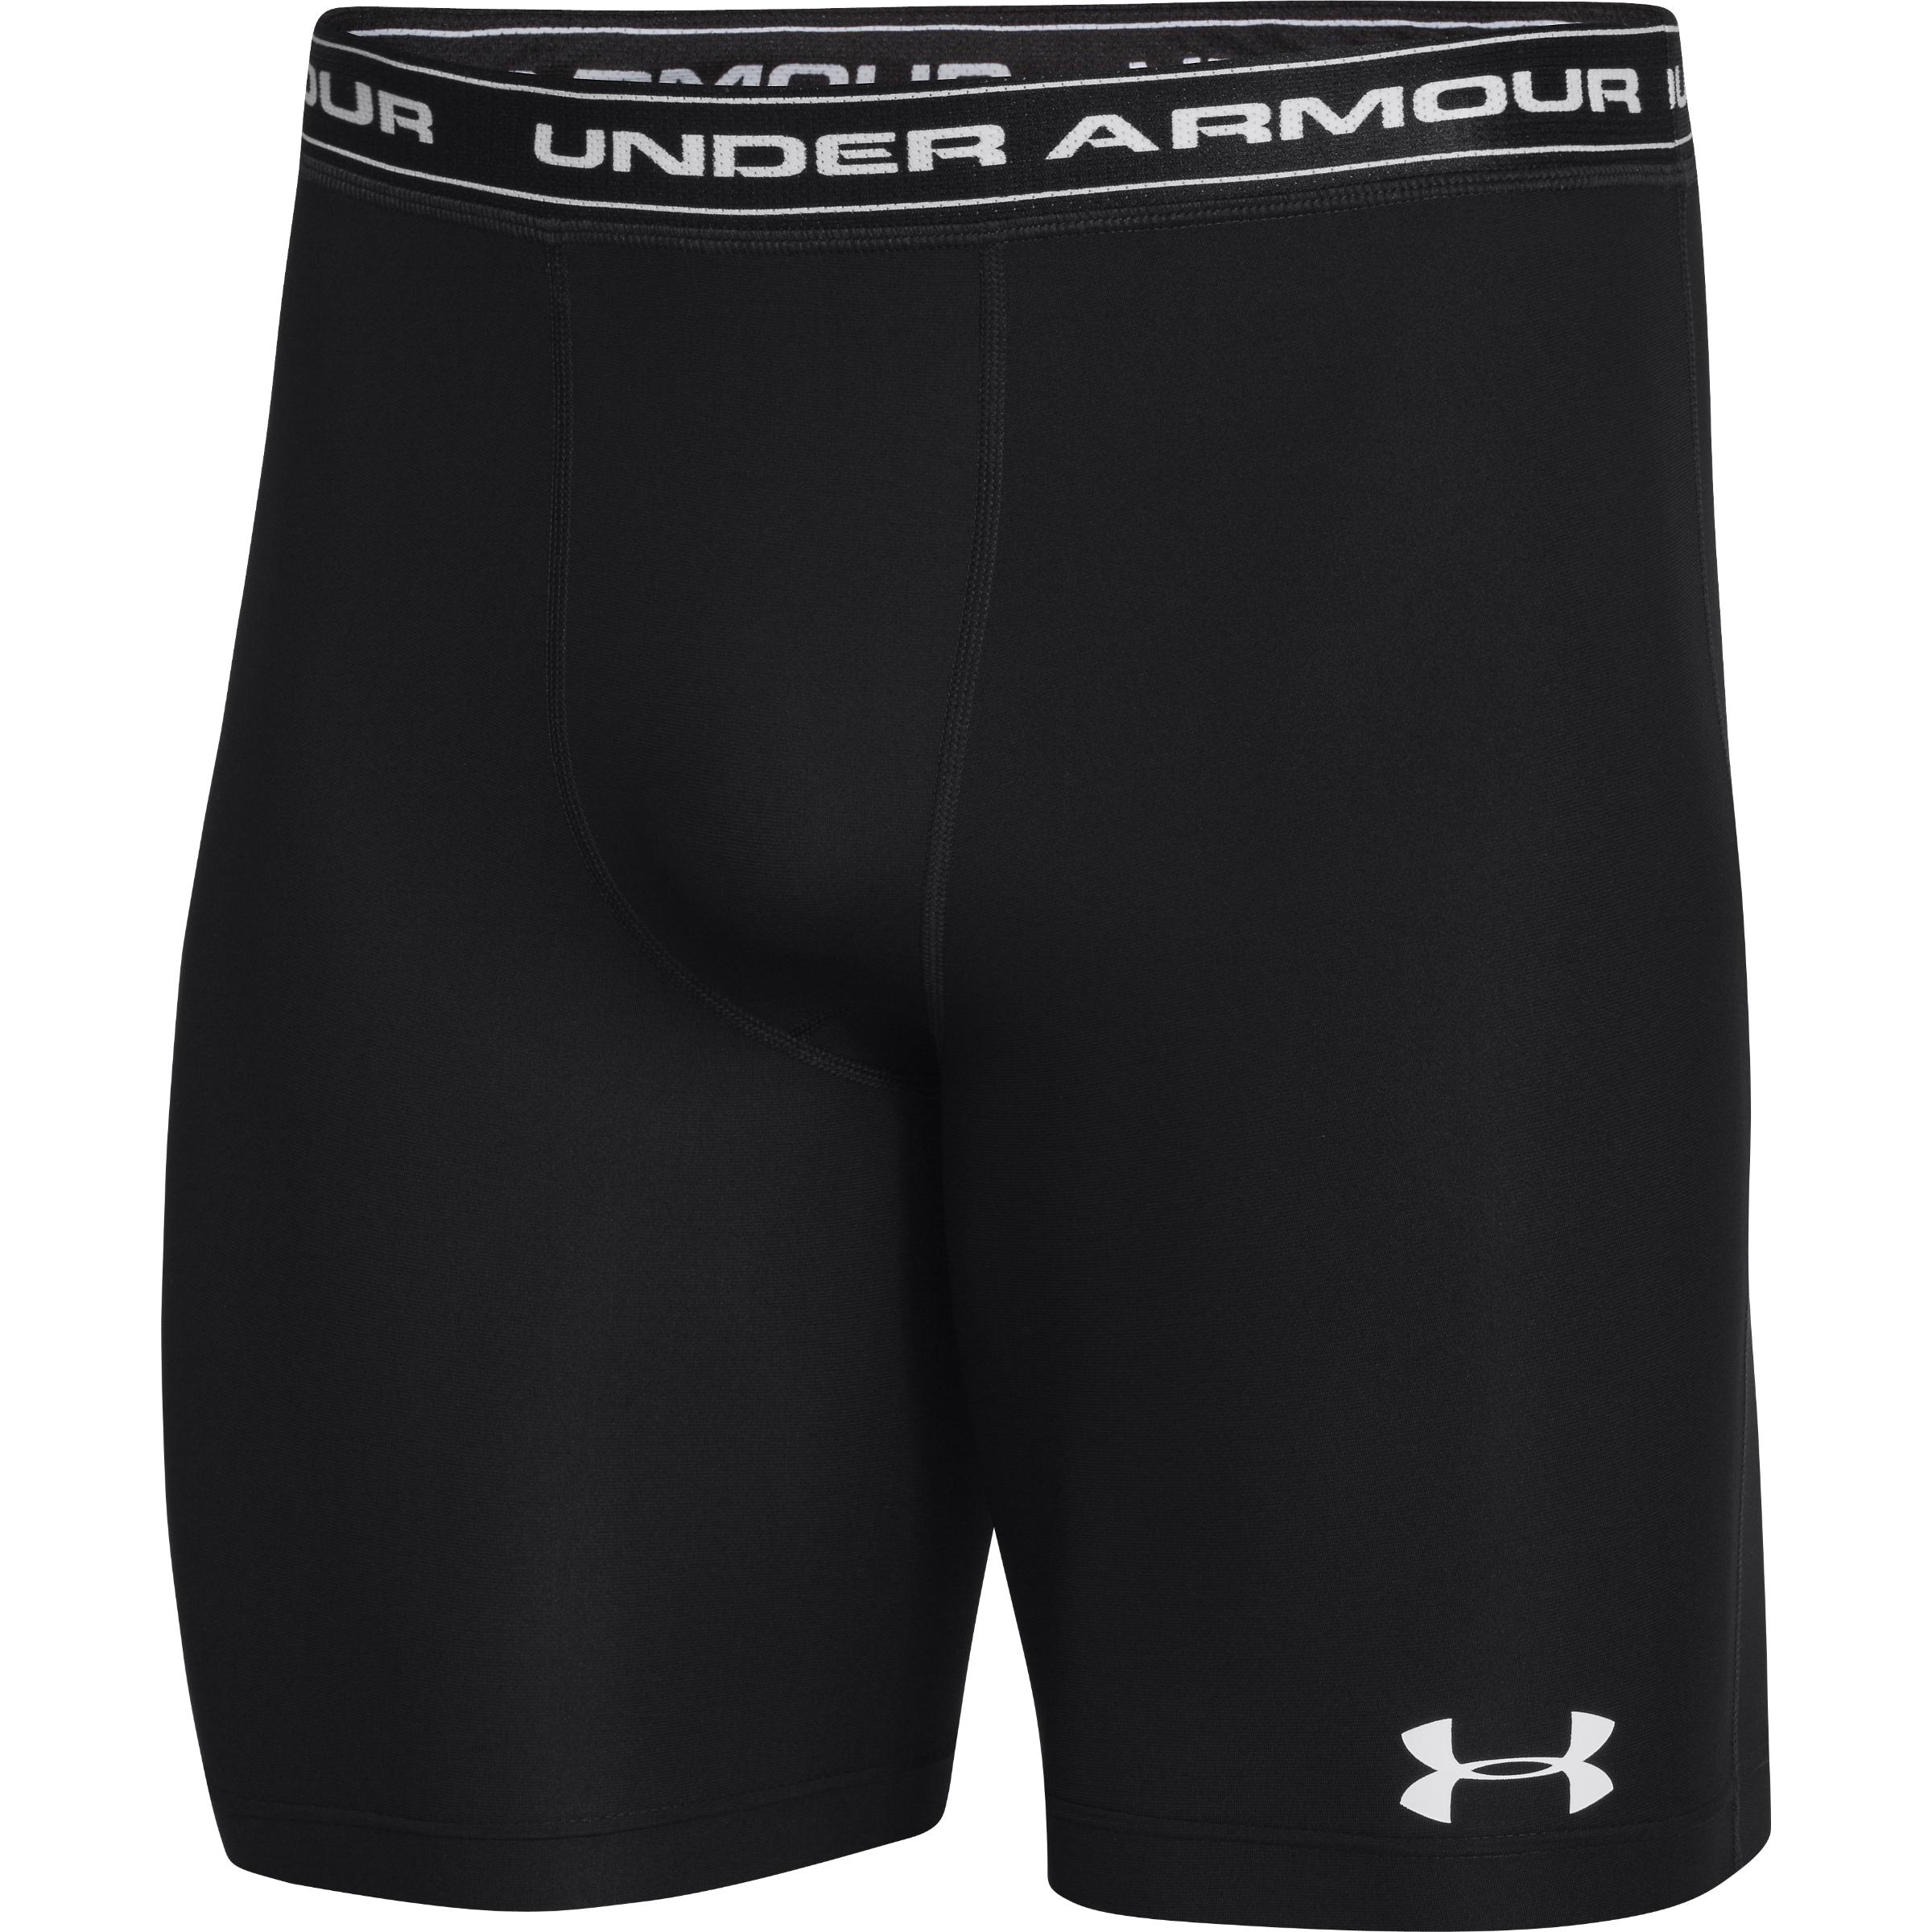 under armour black compression shorts